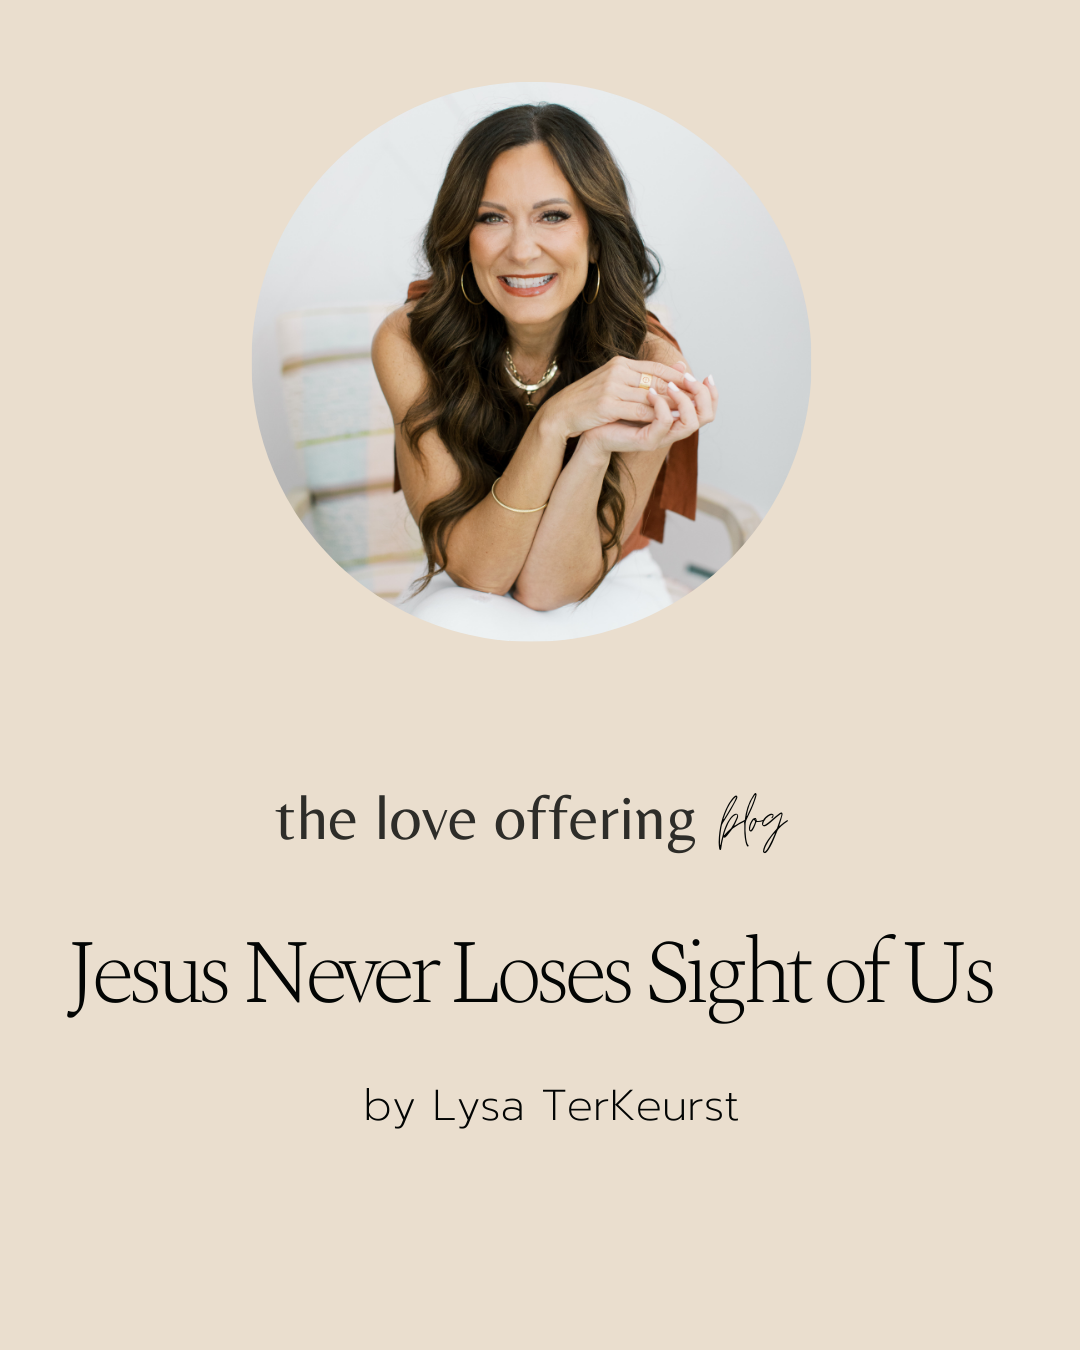 Jesus Never Loses Sight of Us by Lysa TerKeurst